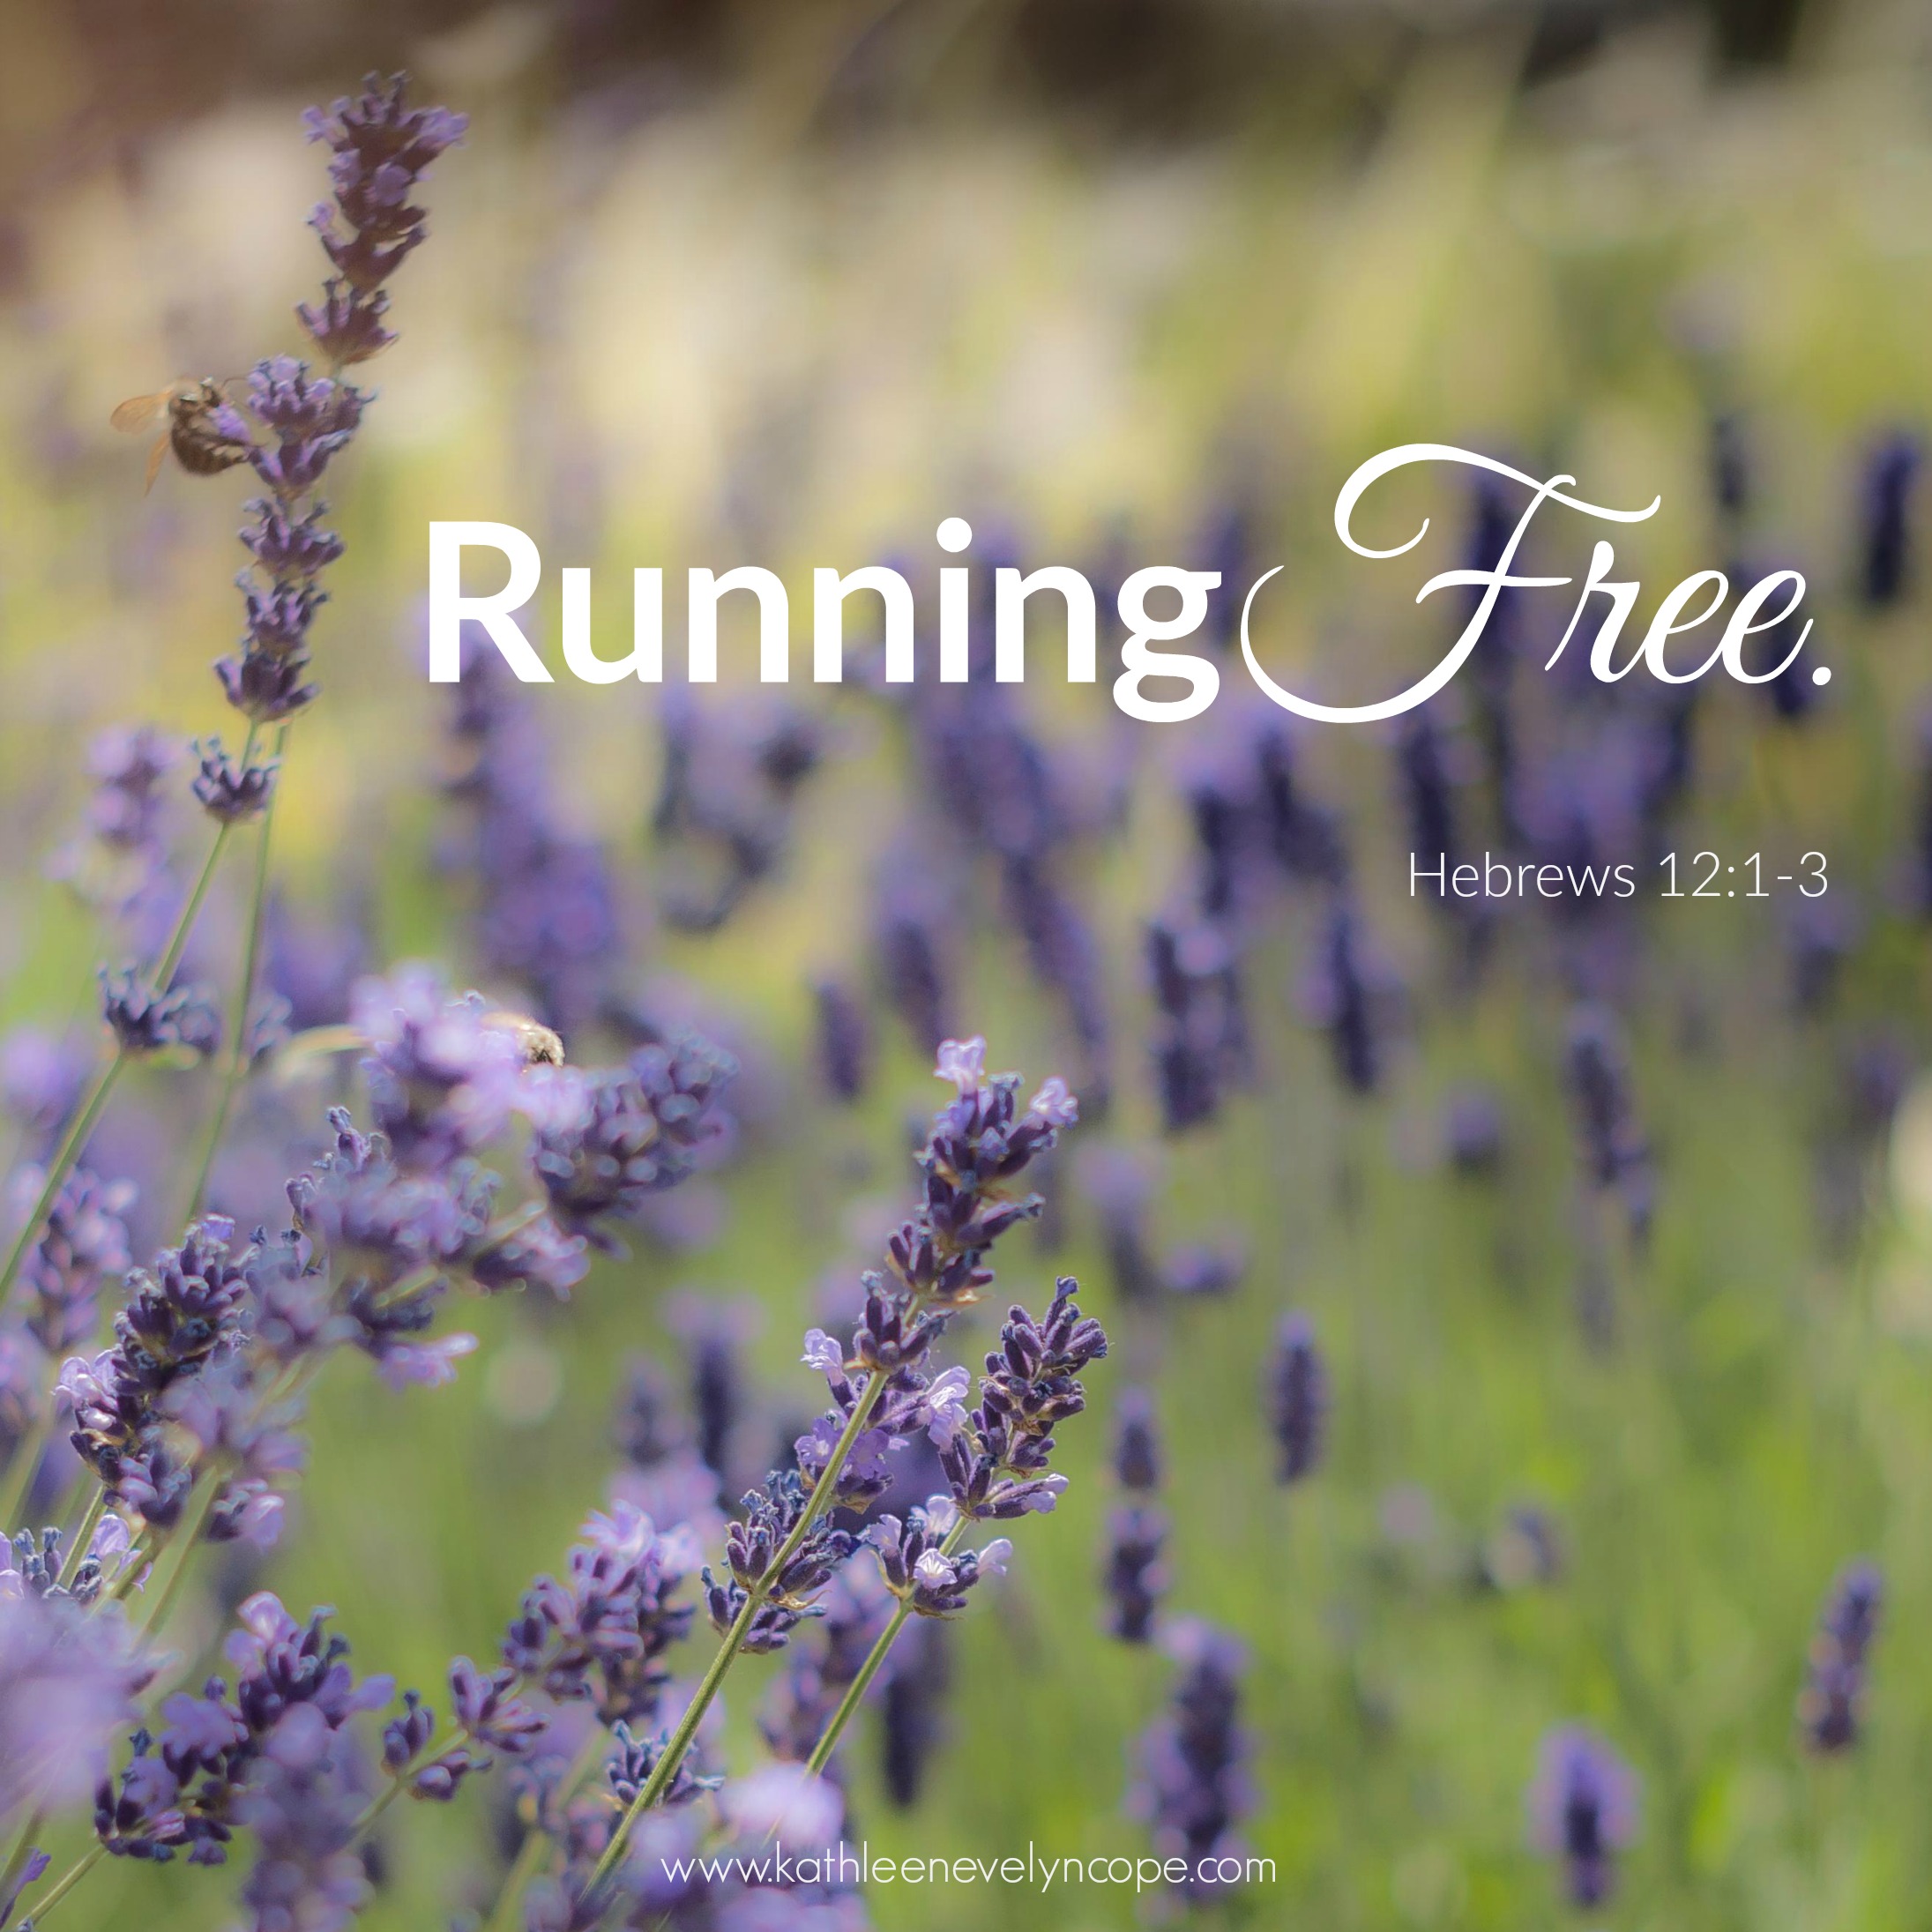 Running Free. Heb 12:1-3